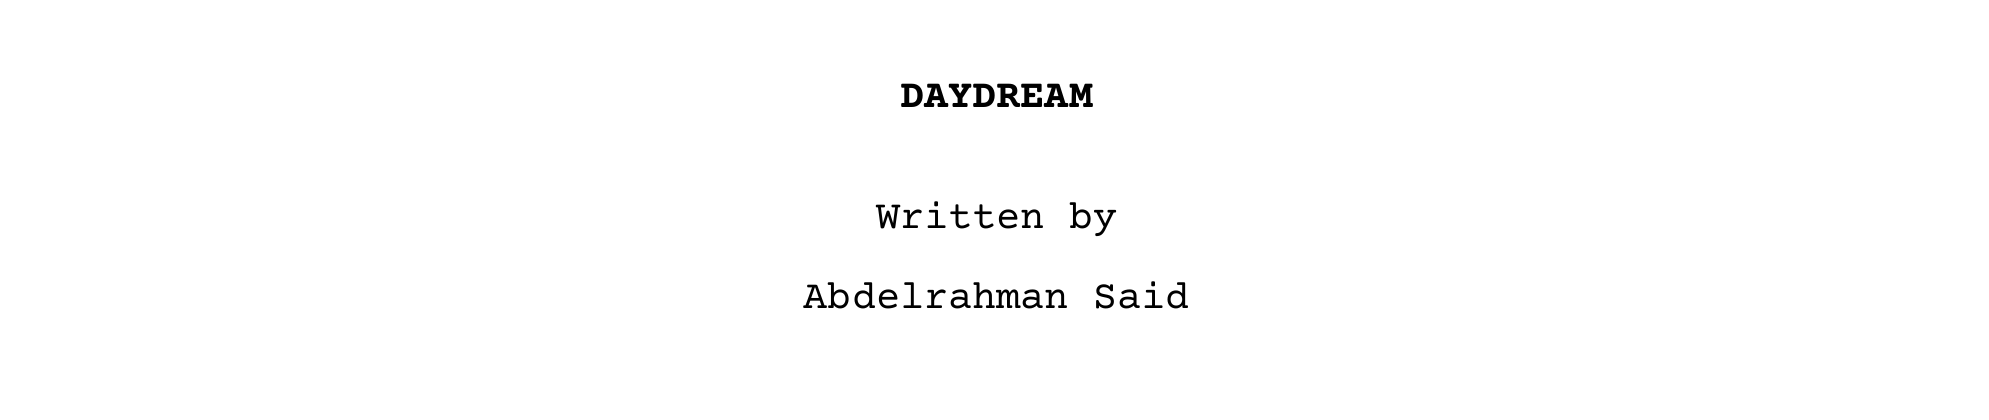 Daydream screenplay